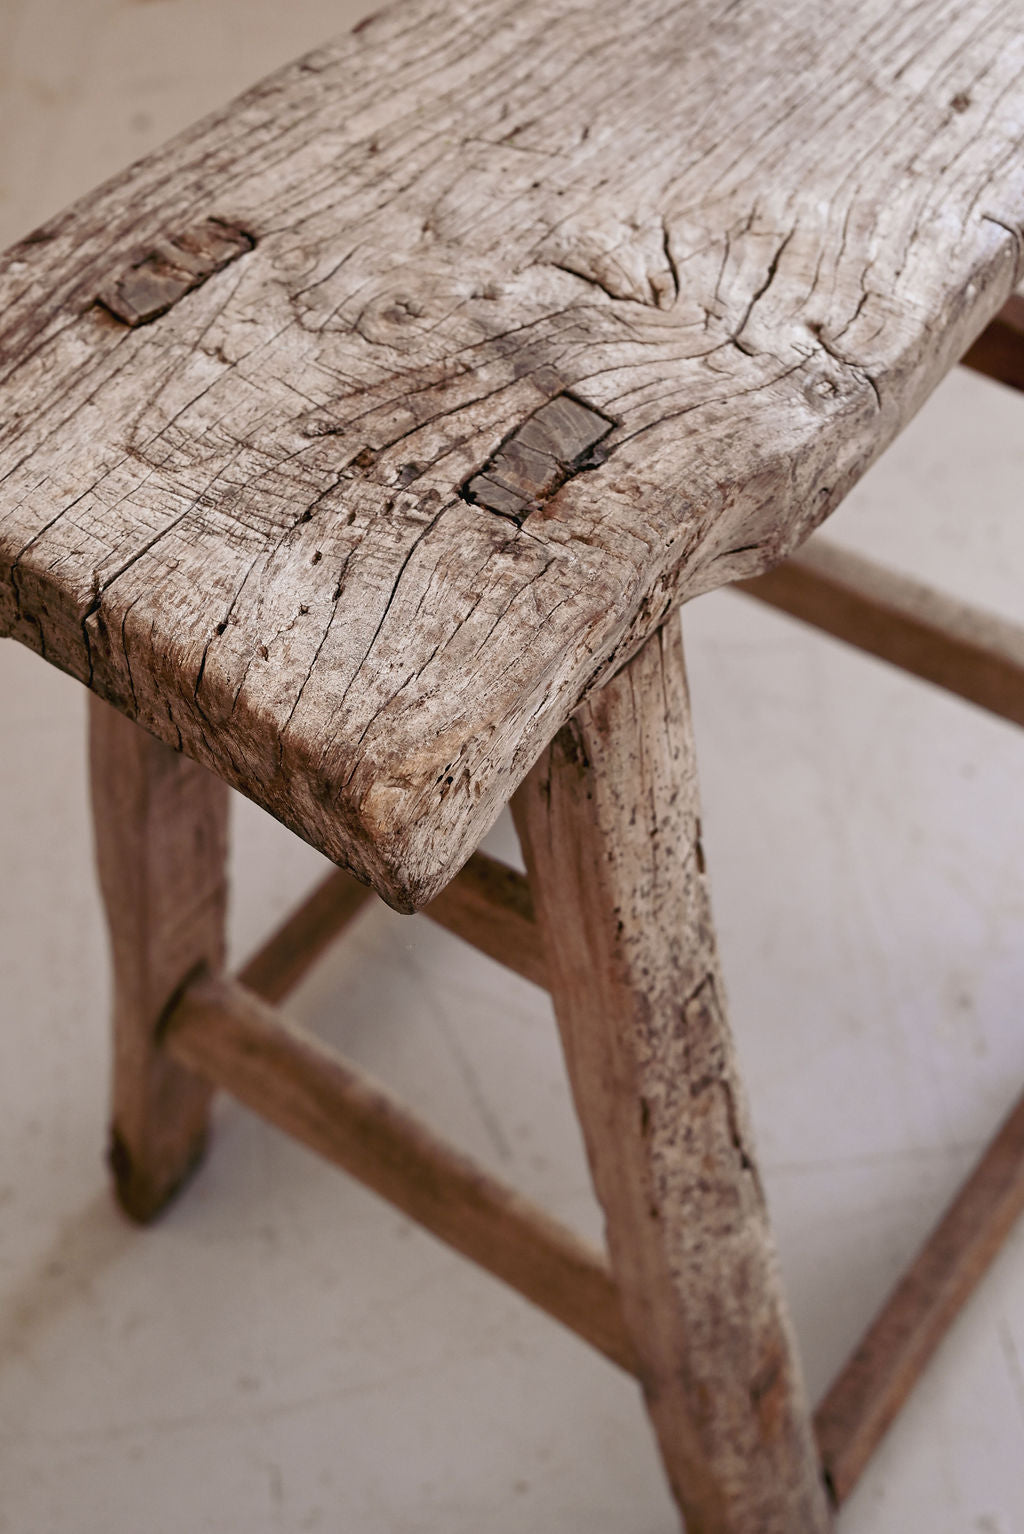 primitive french farmhouse stool iii